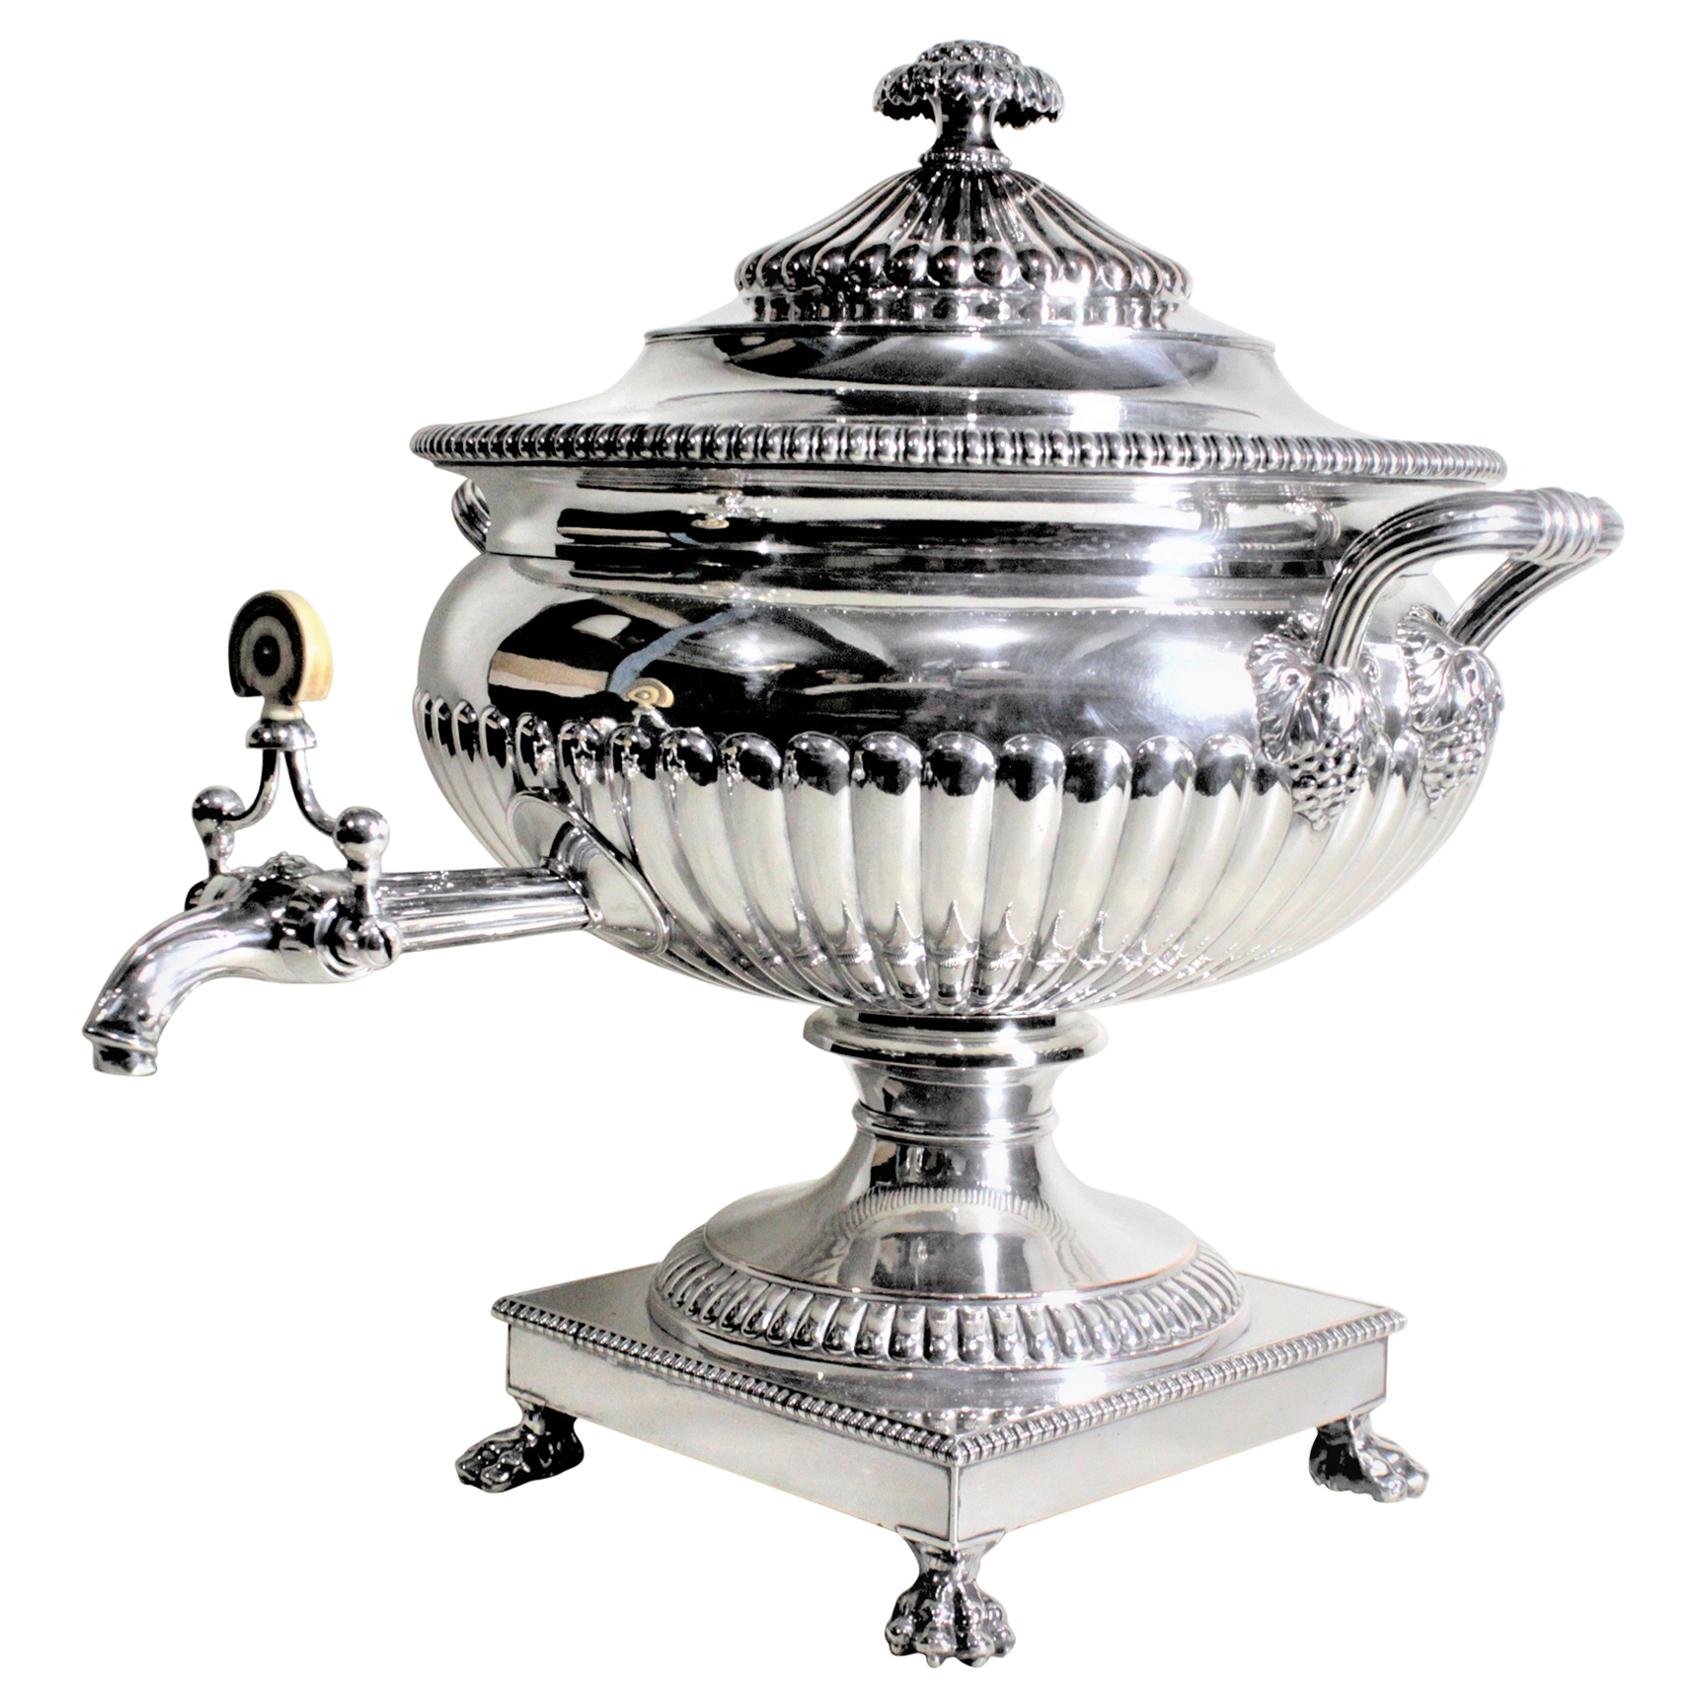 Servidor o Urna de Pedestal con Pie de Garra para Agua Caliente o Café, Plateado Antiguo